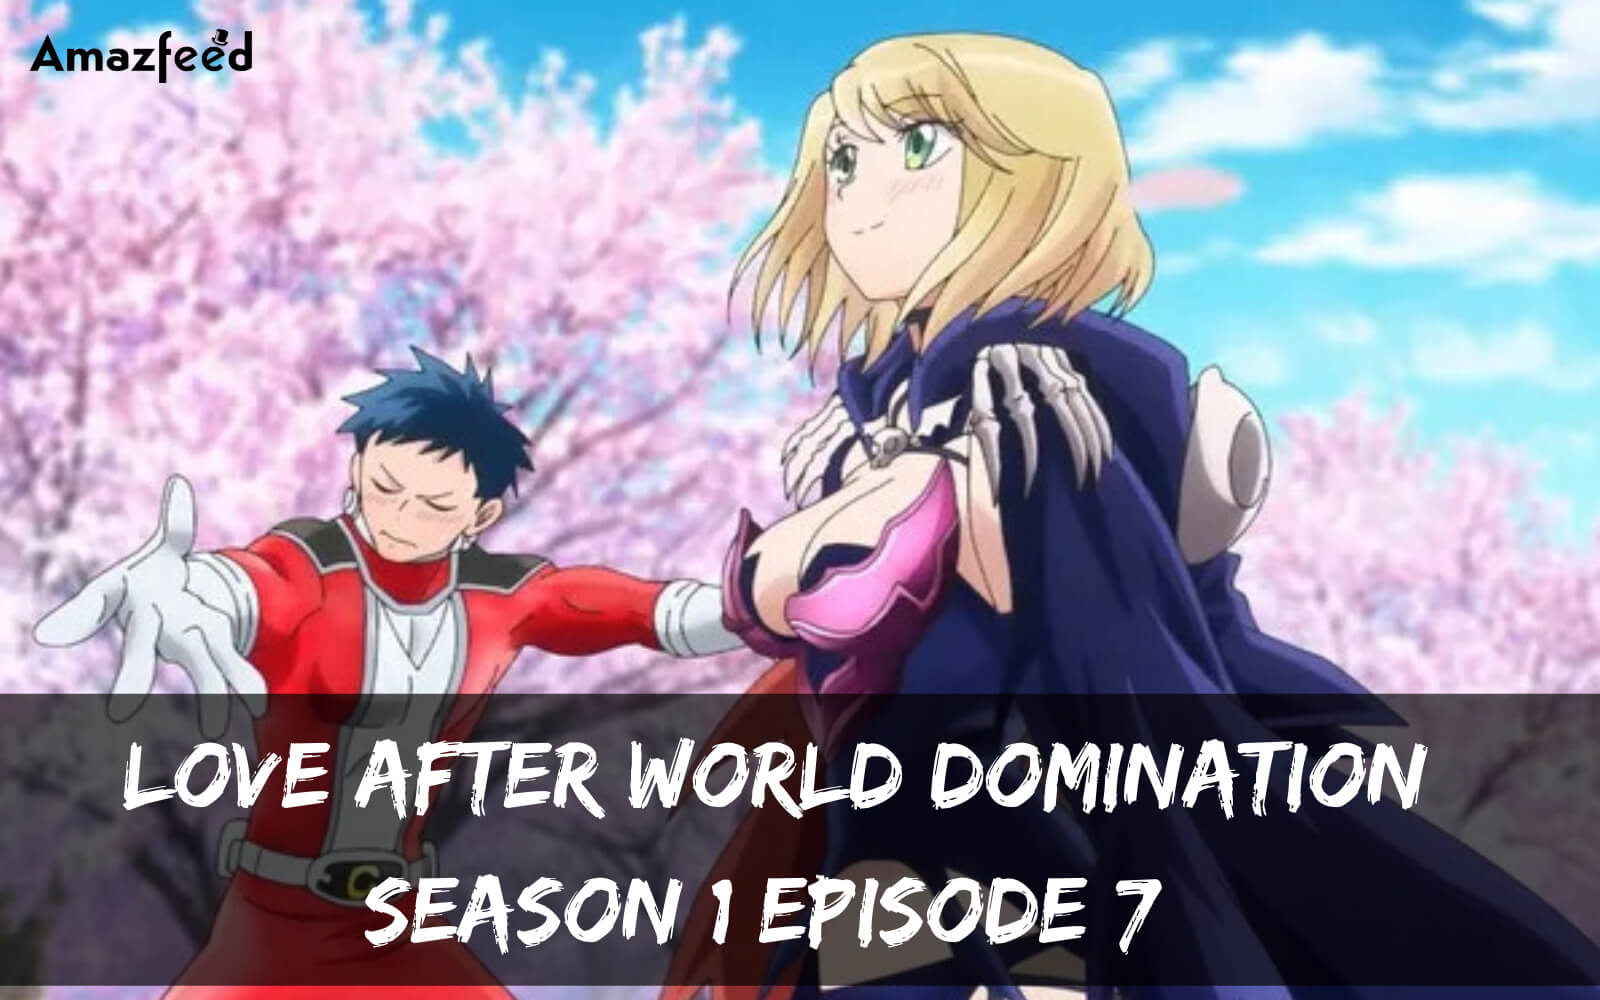 Love After World Domination Season 1 Episode 7 release date